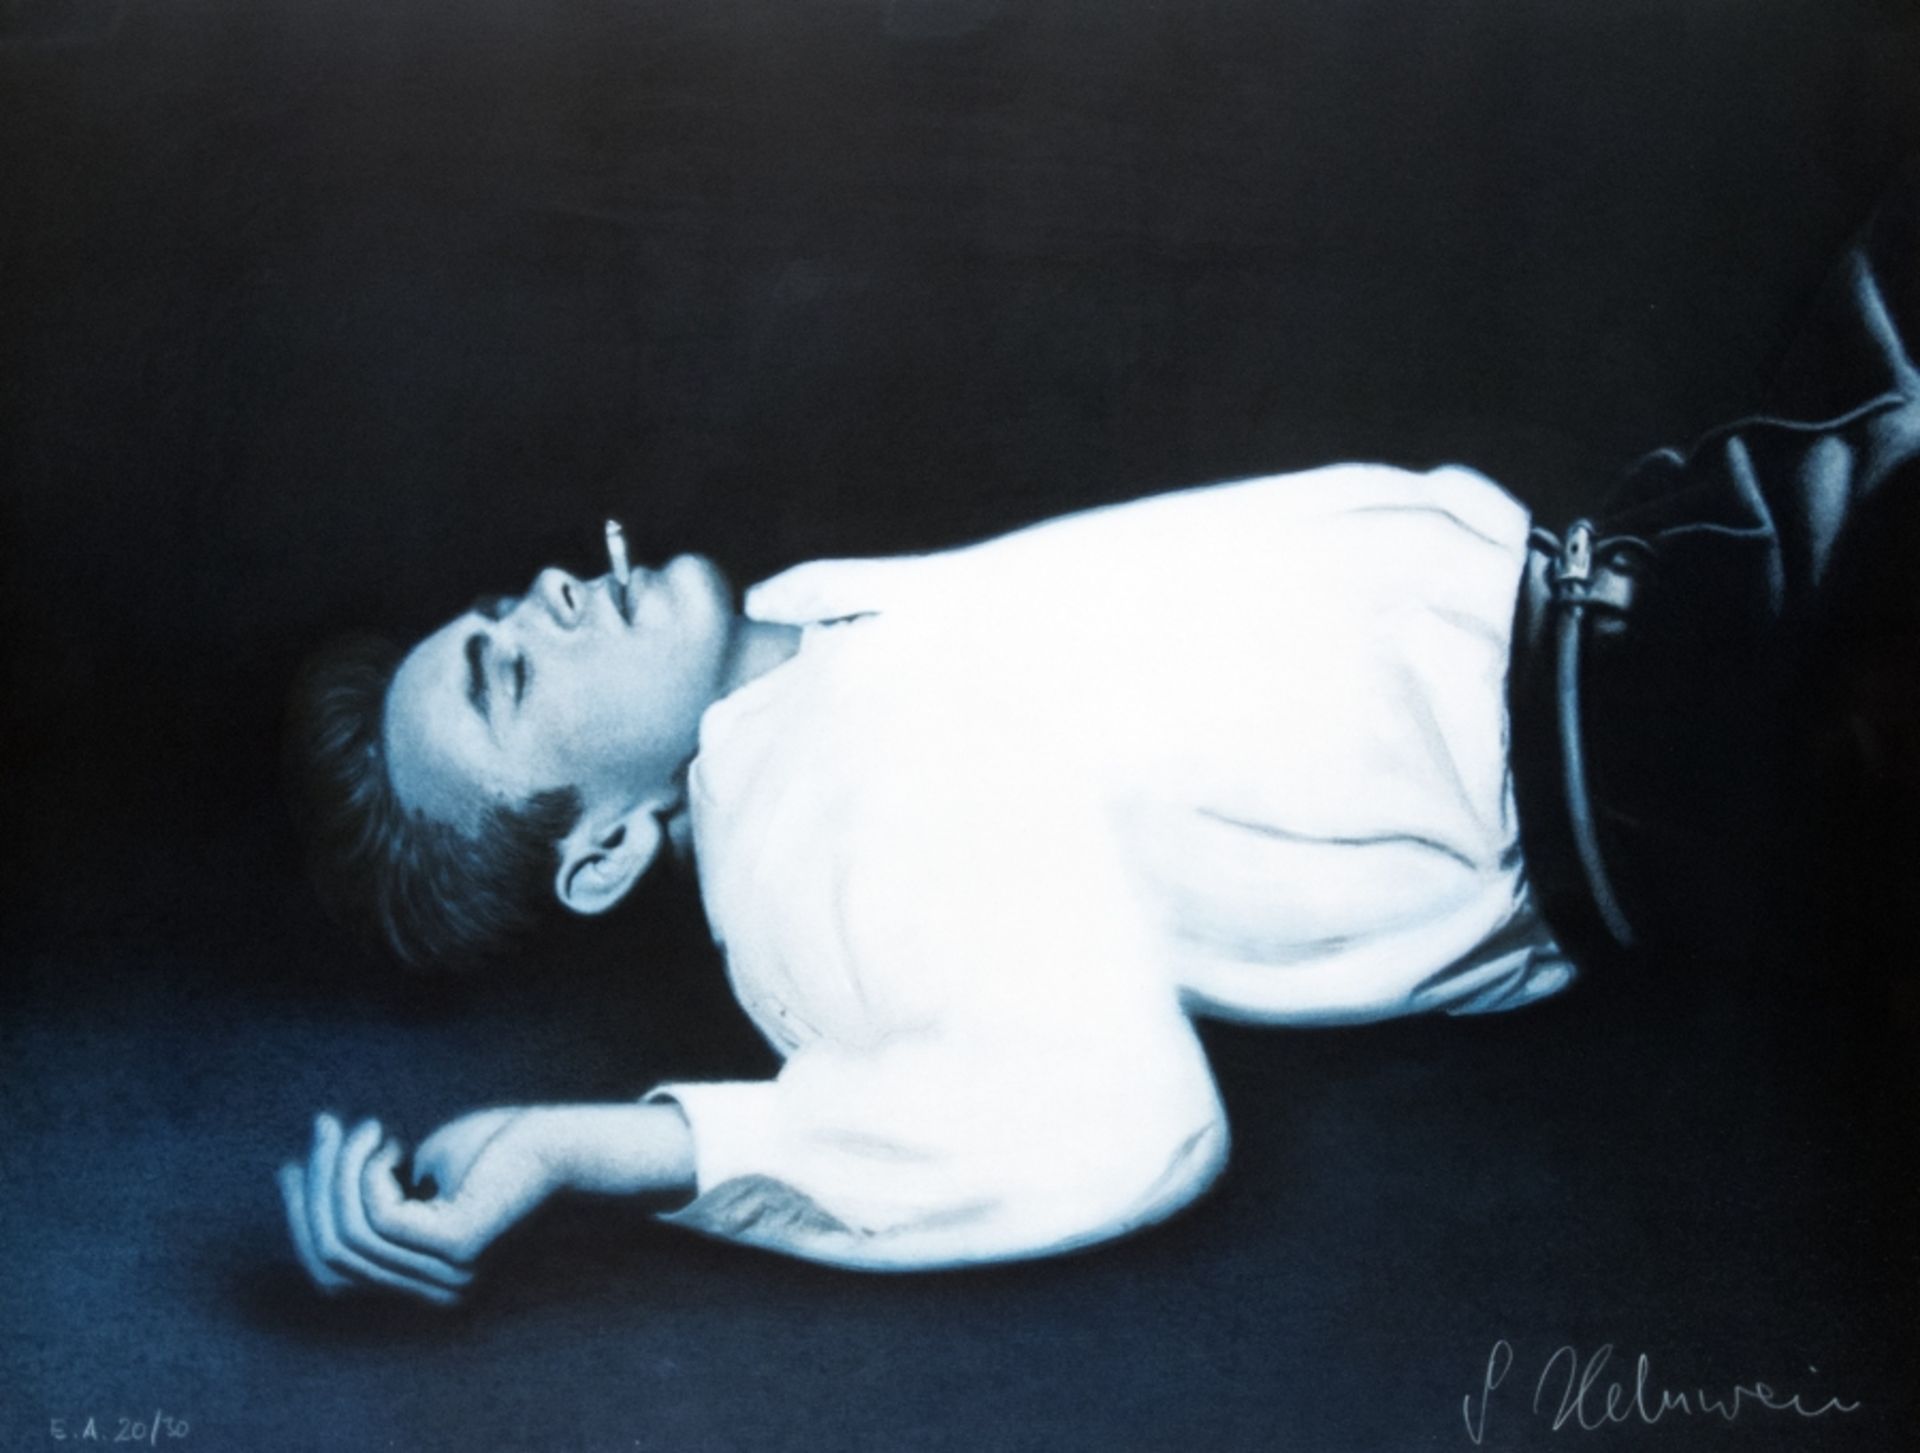 Helnwein, Gottfried: James Dean